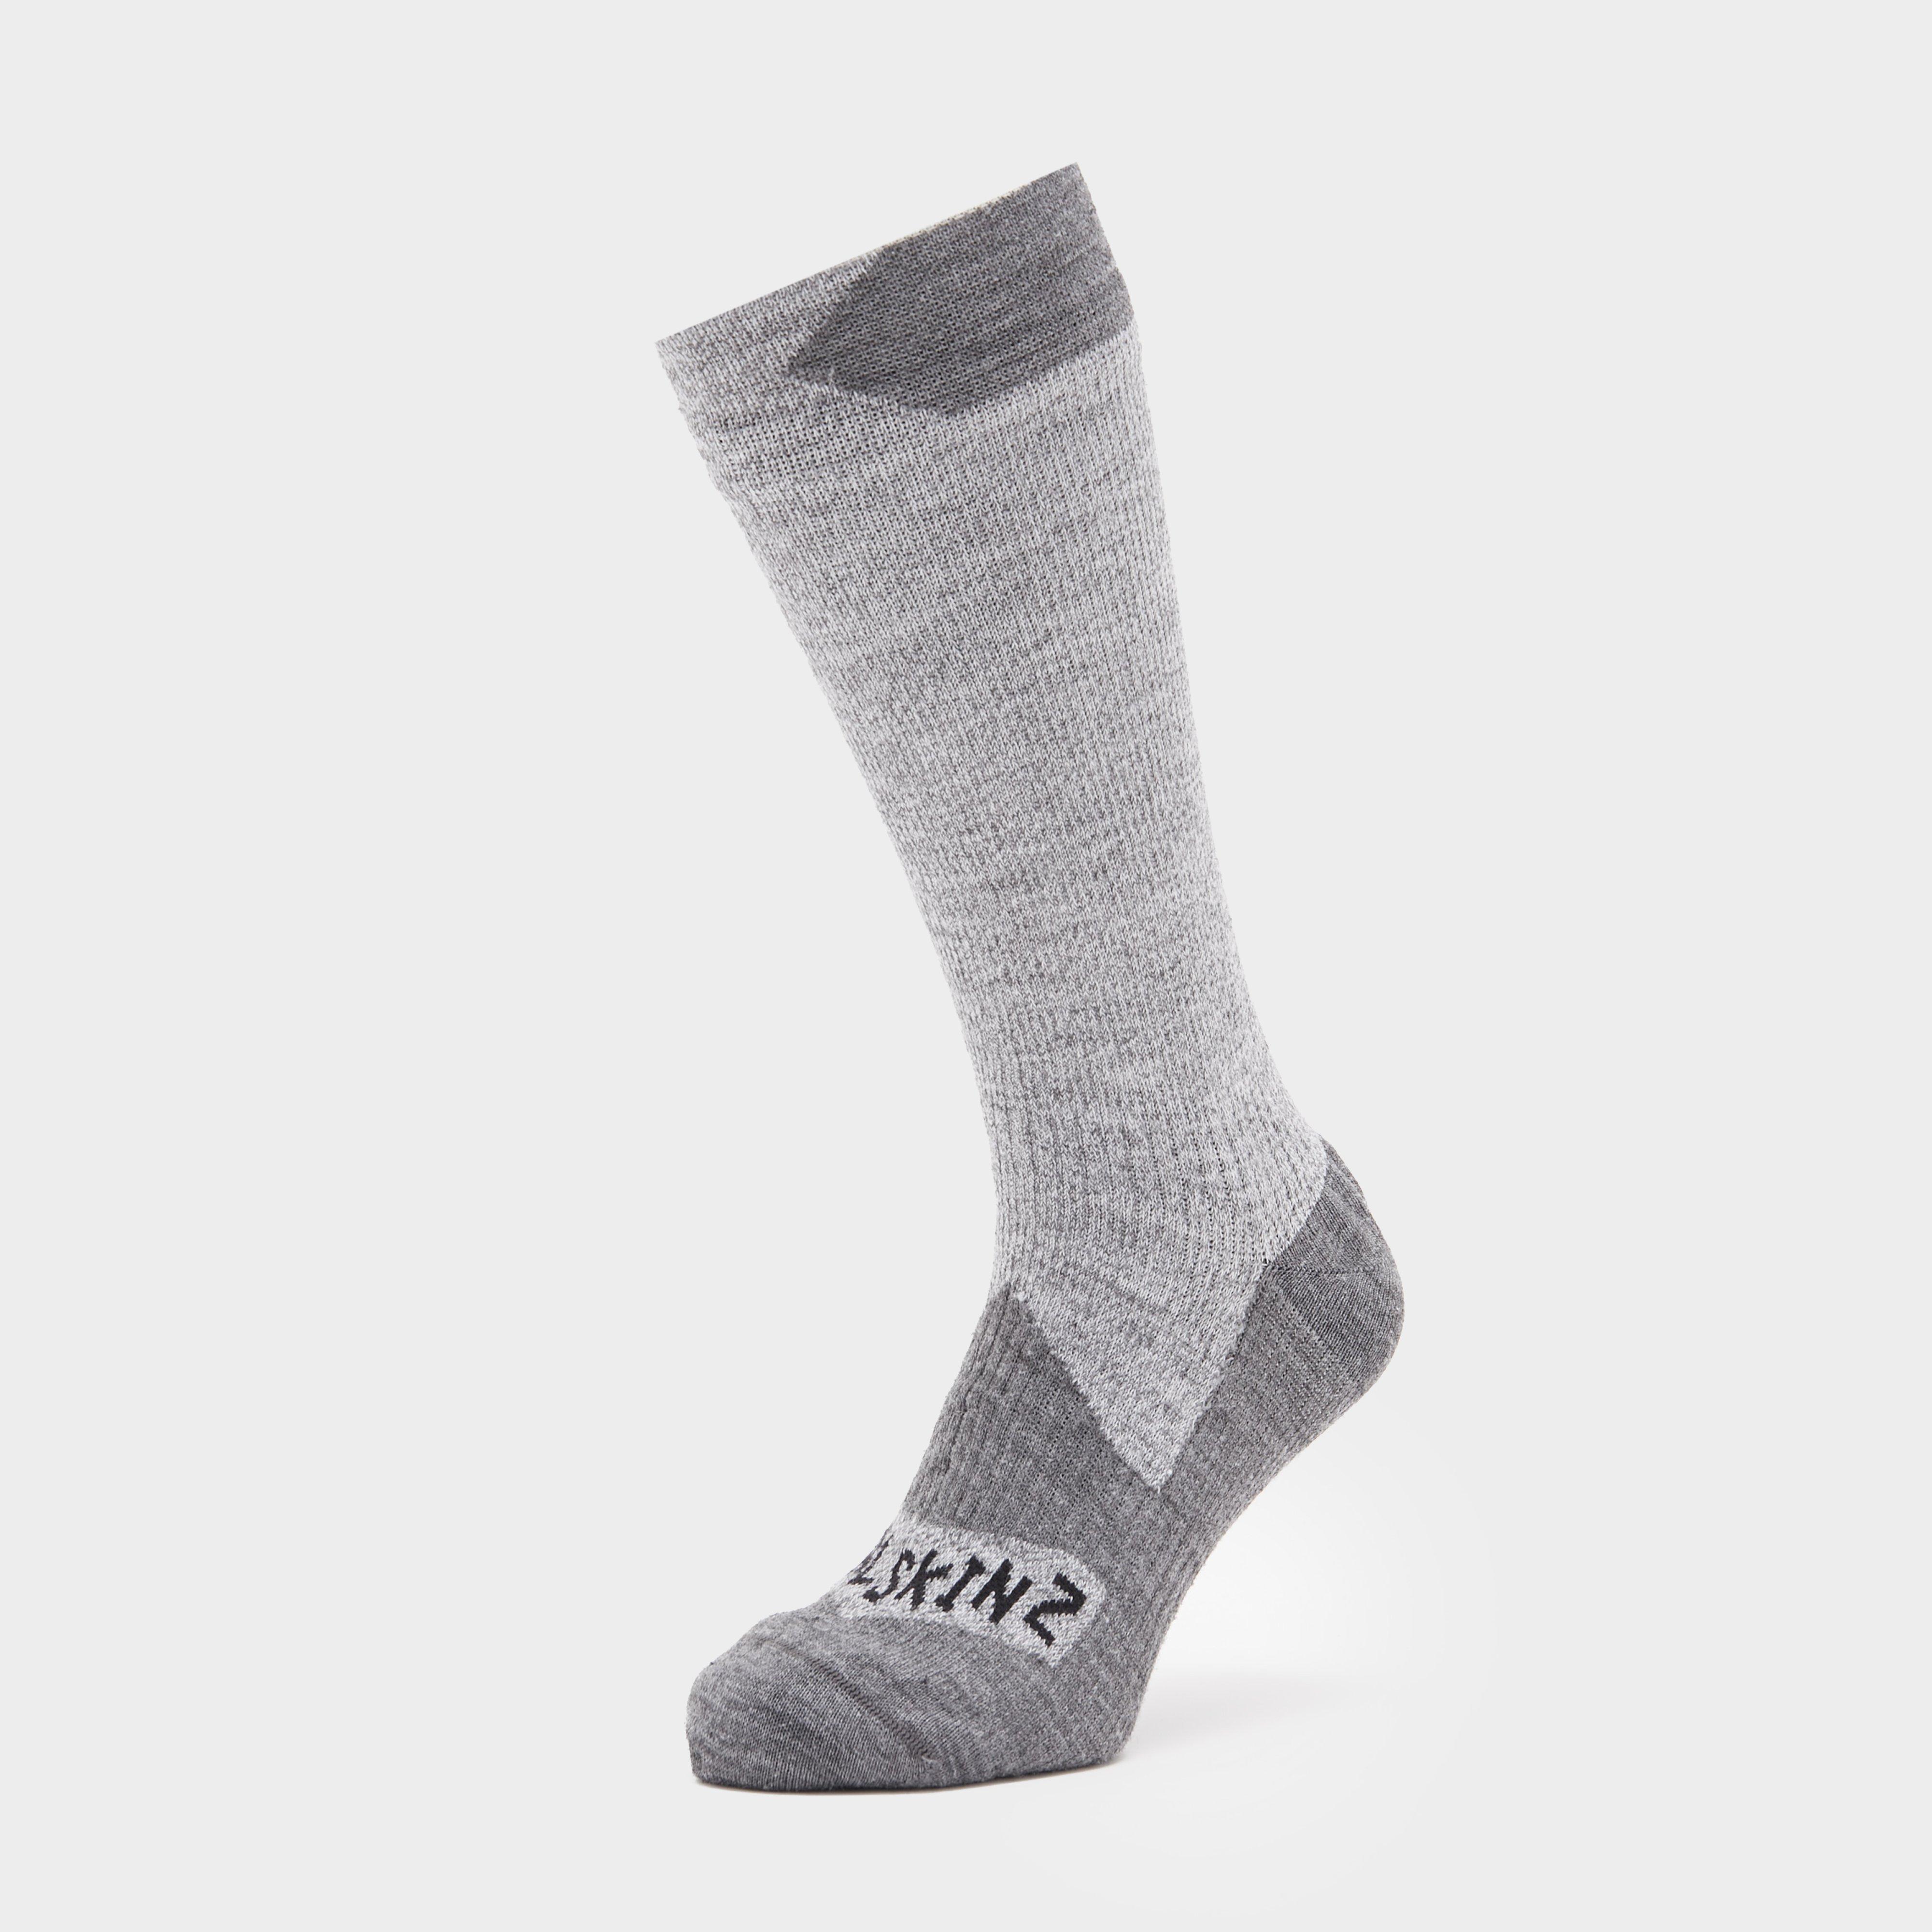  Sealskinz Waterproof All Weather Mid Length Socks, Grey